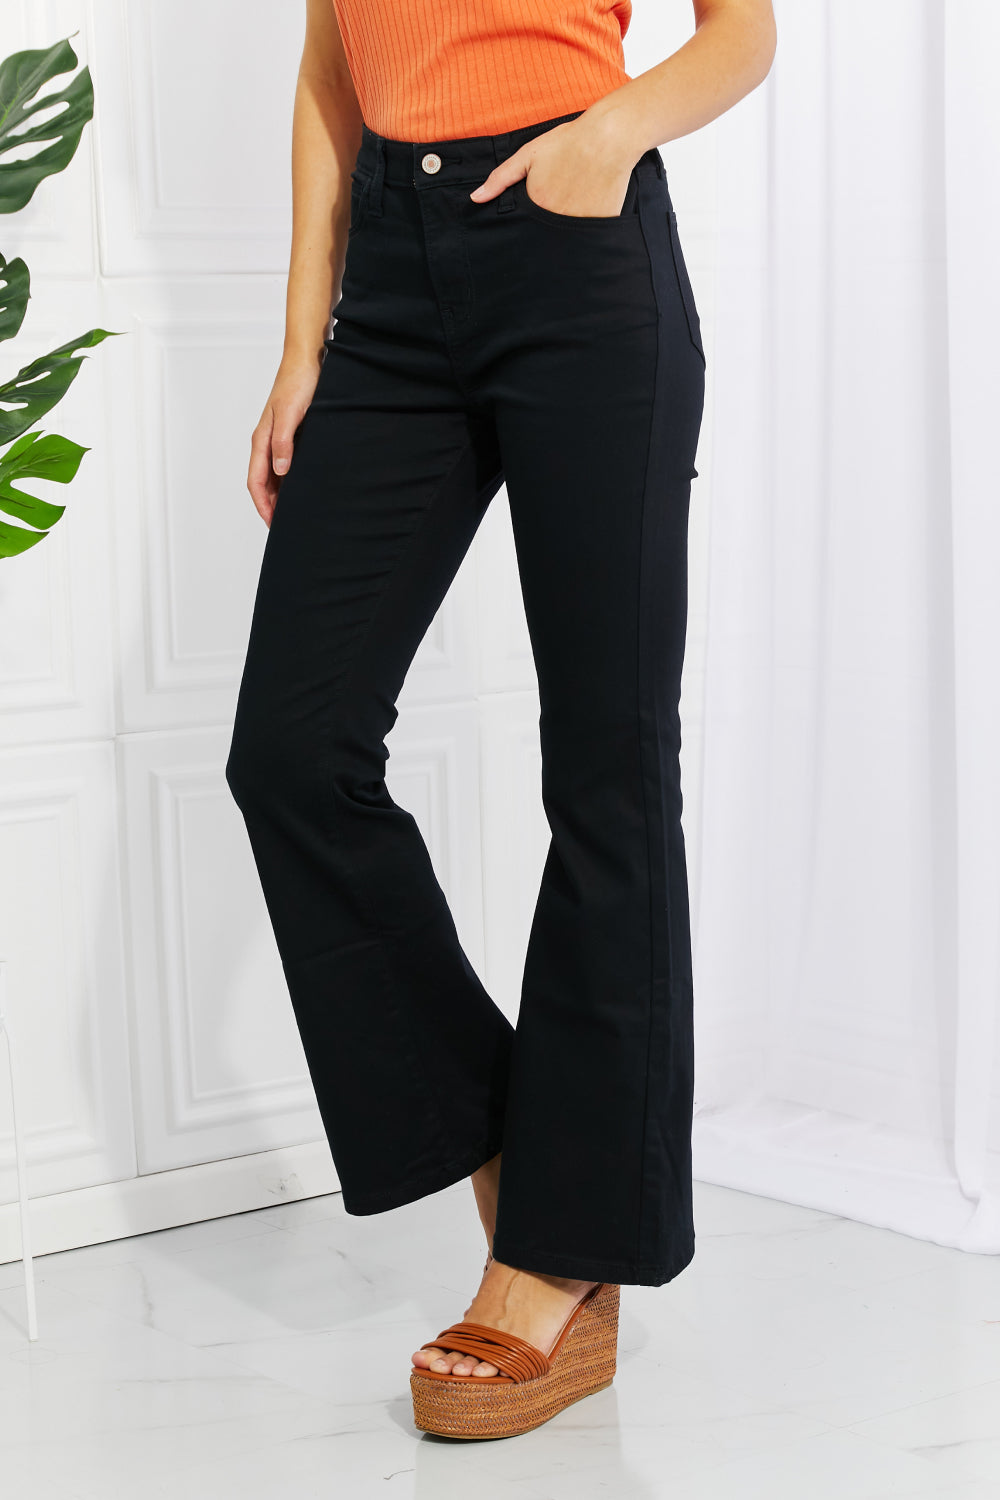 Zenana Clementine Full Size High-Rise Bootcut Pants in Black | Pants - CHANELIA